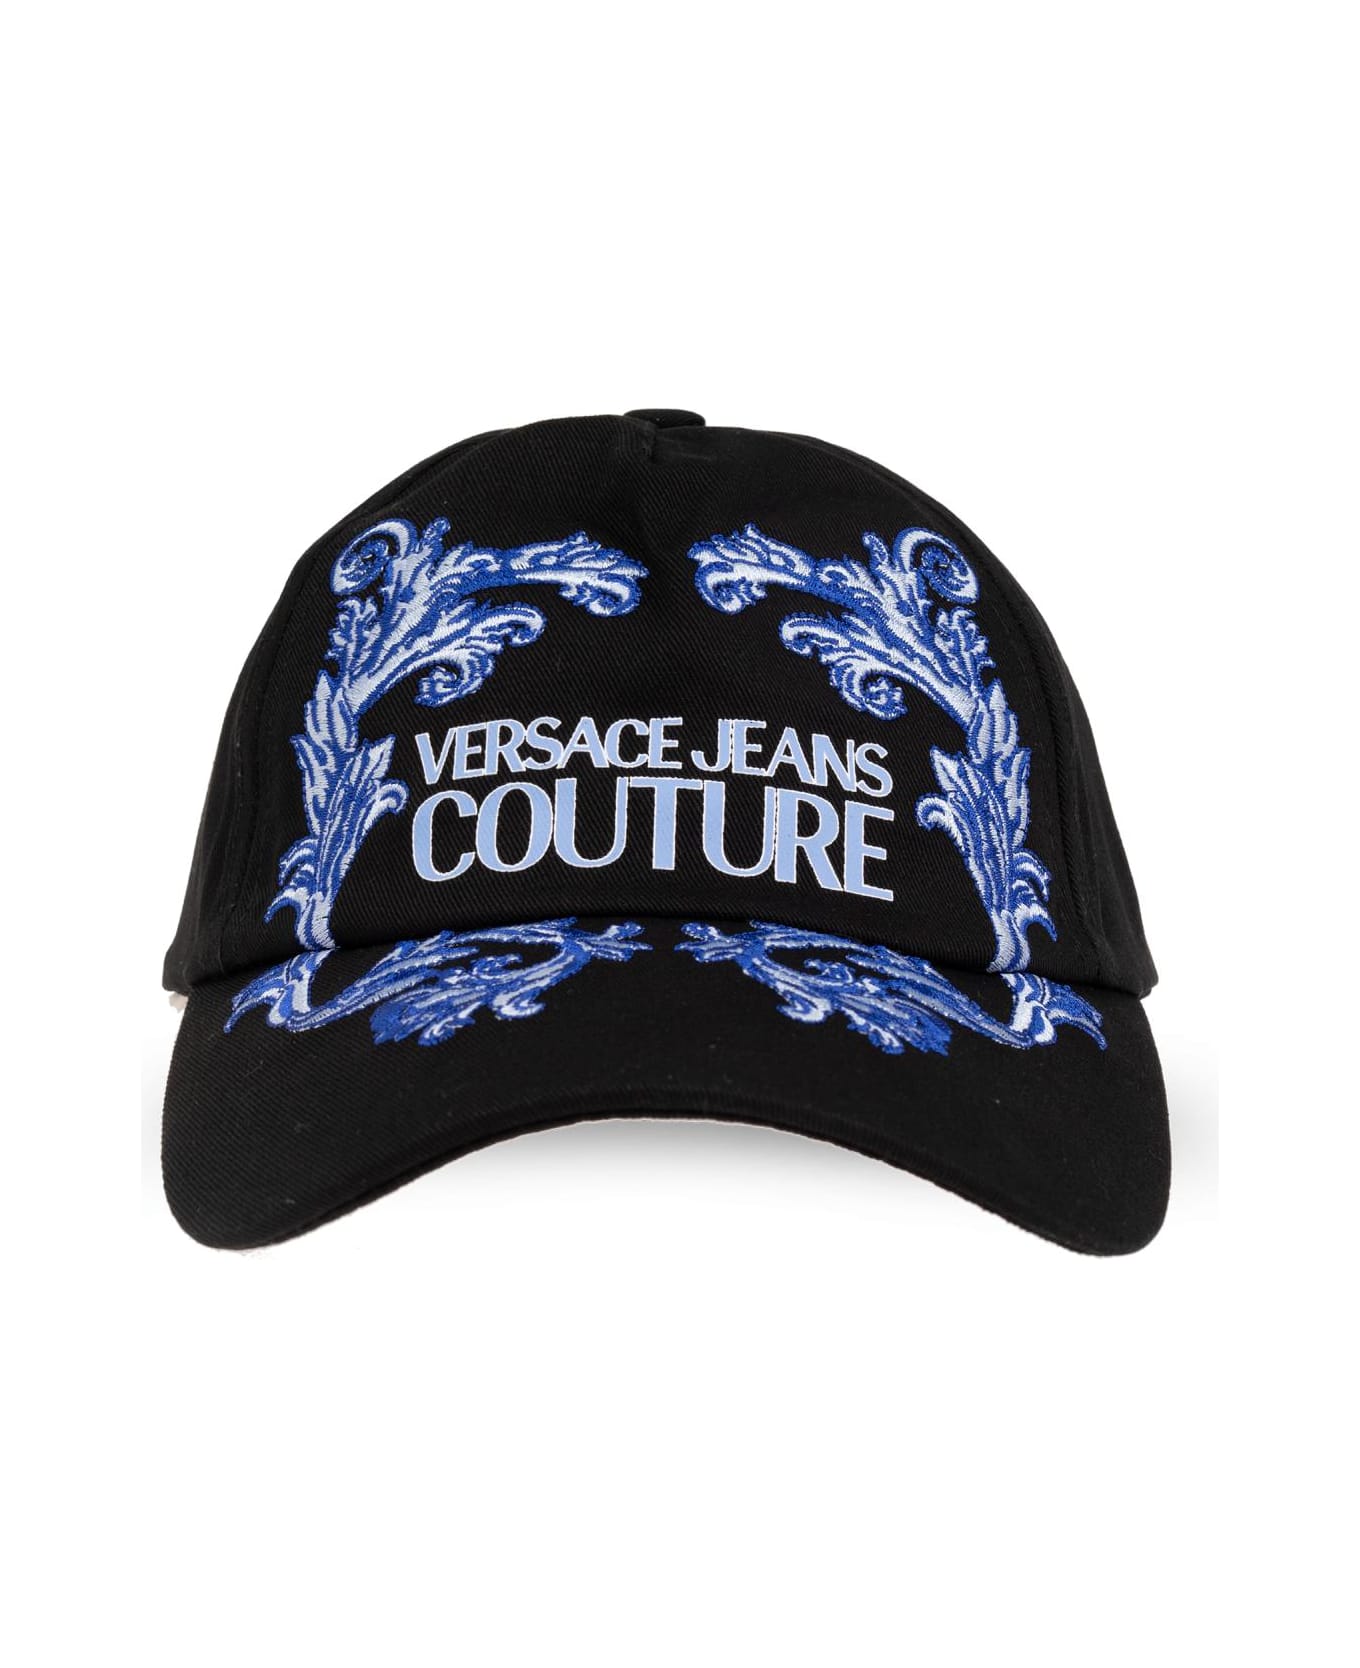 Versace Jeans Couture Baseball Cap - Black/multi 帽子